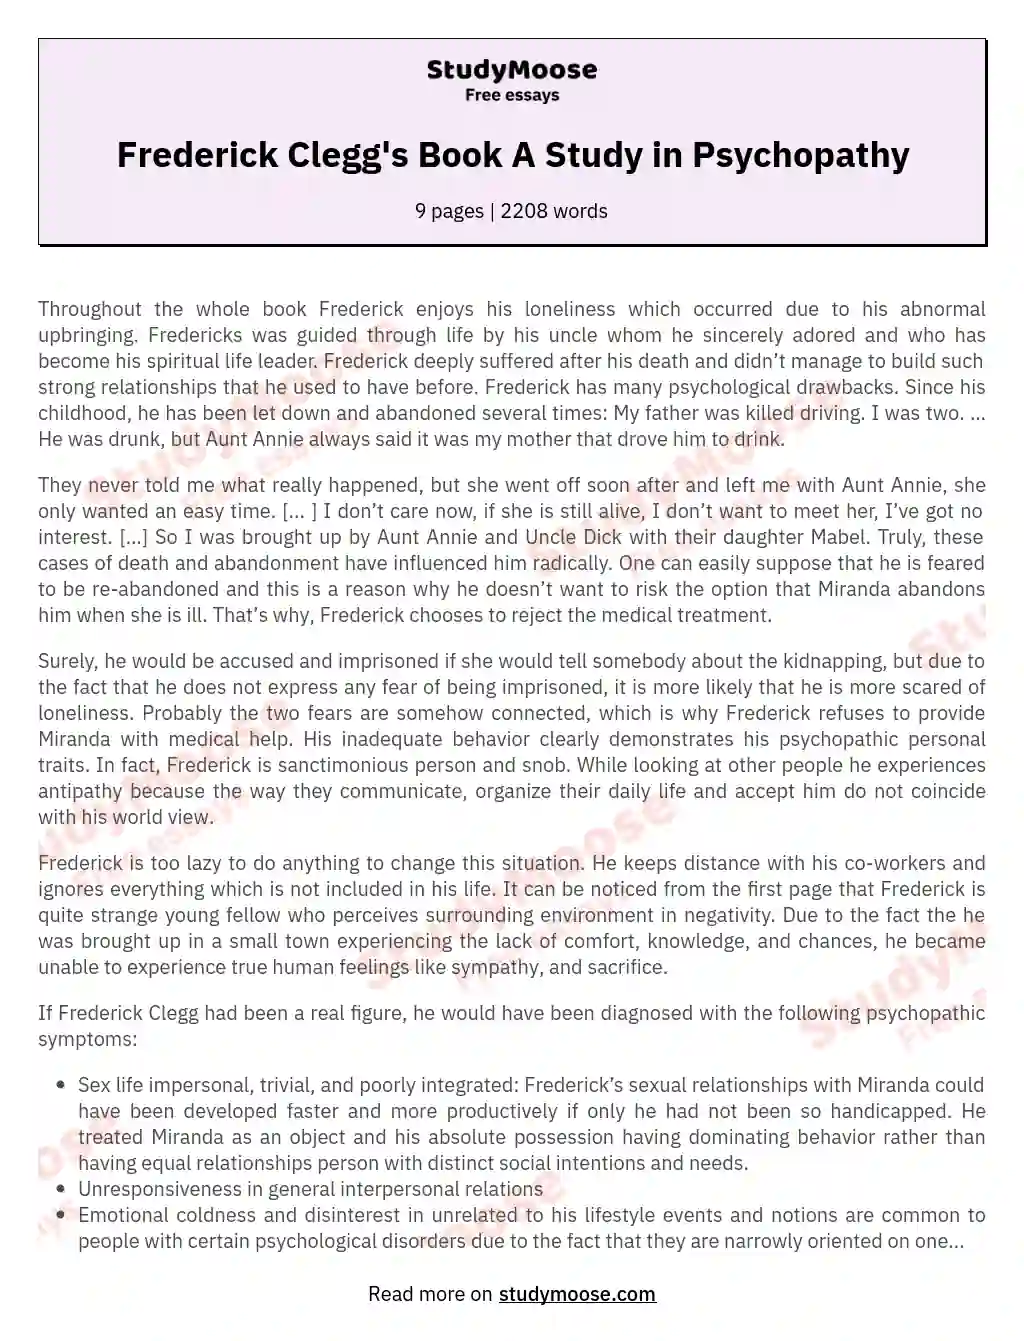 Frederick Clegg's Book A Study in Psychopathy essay